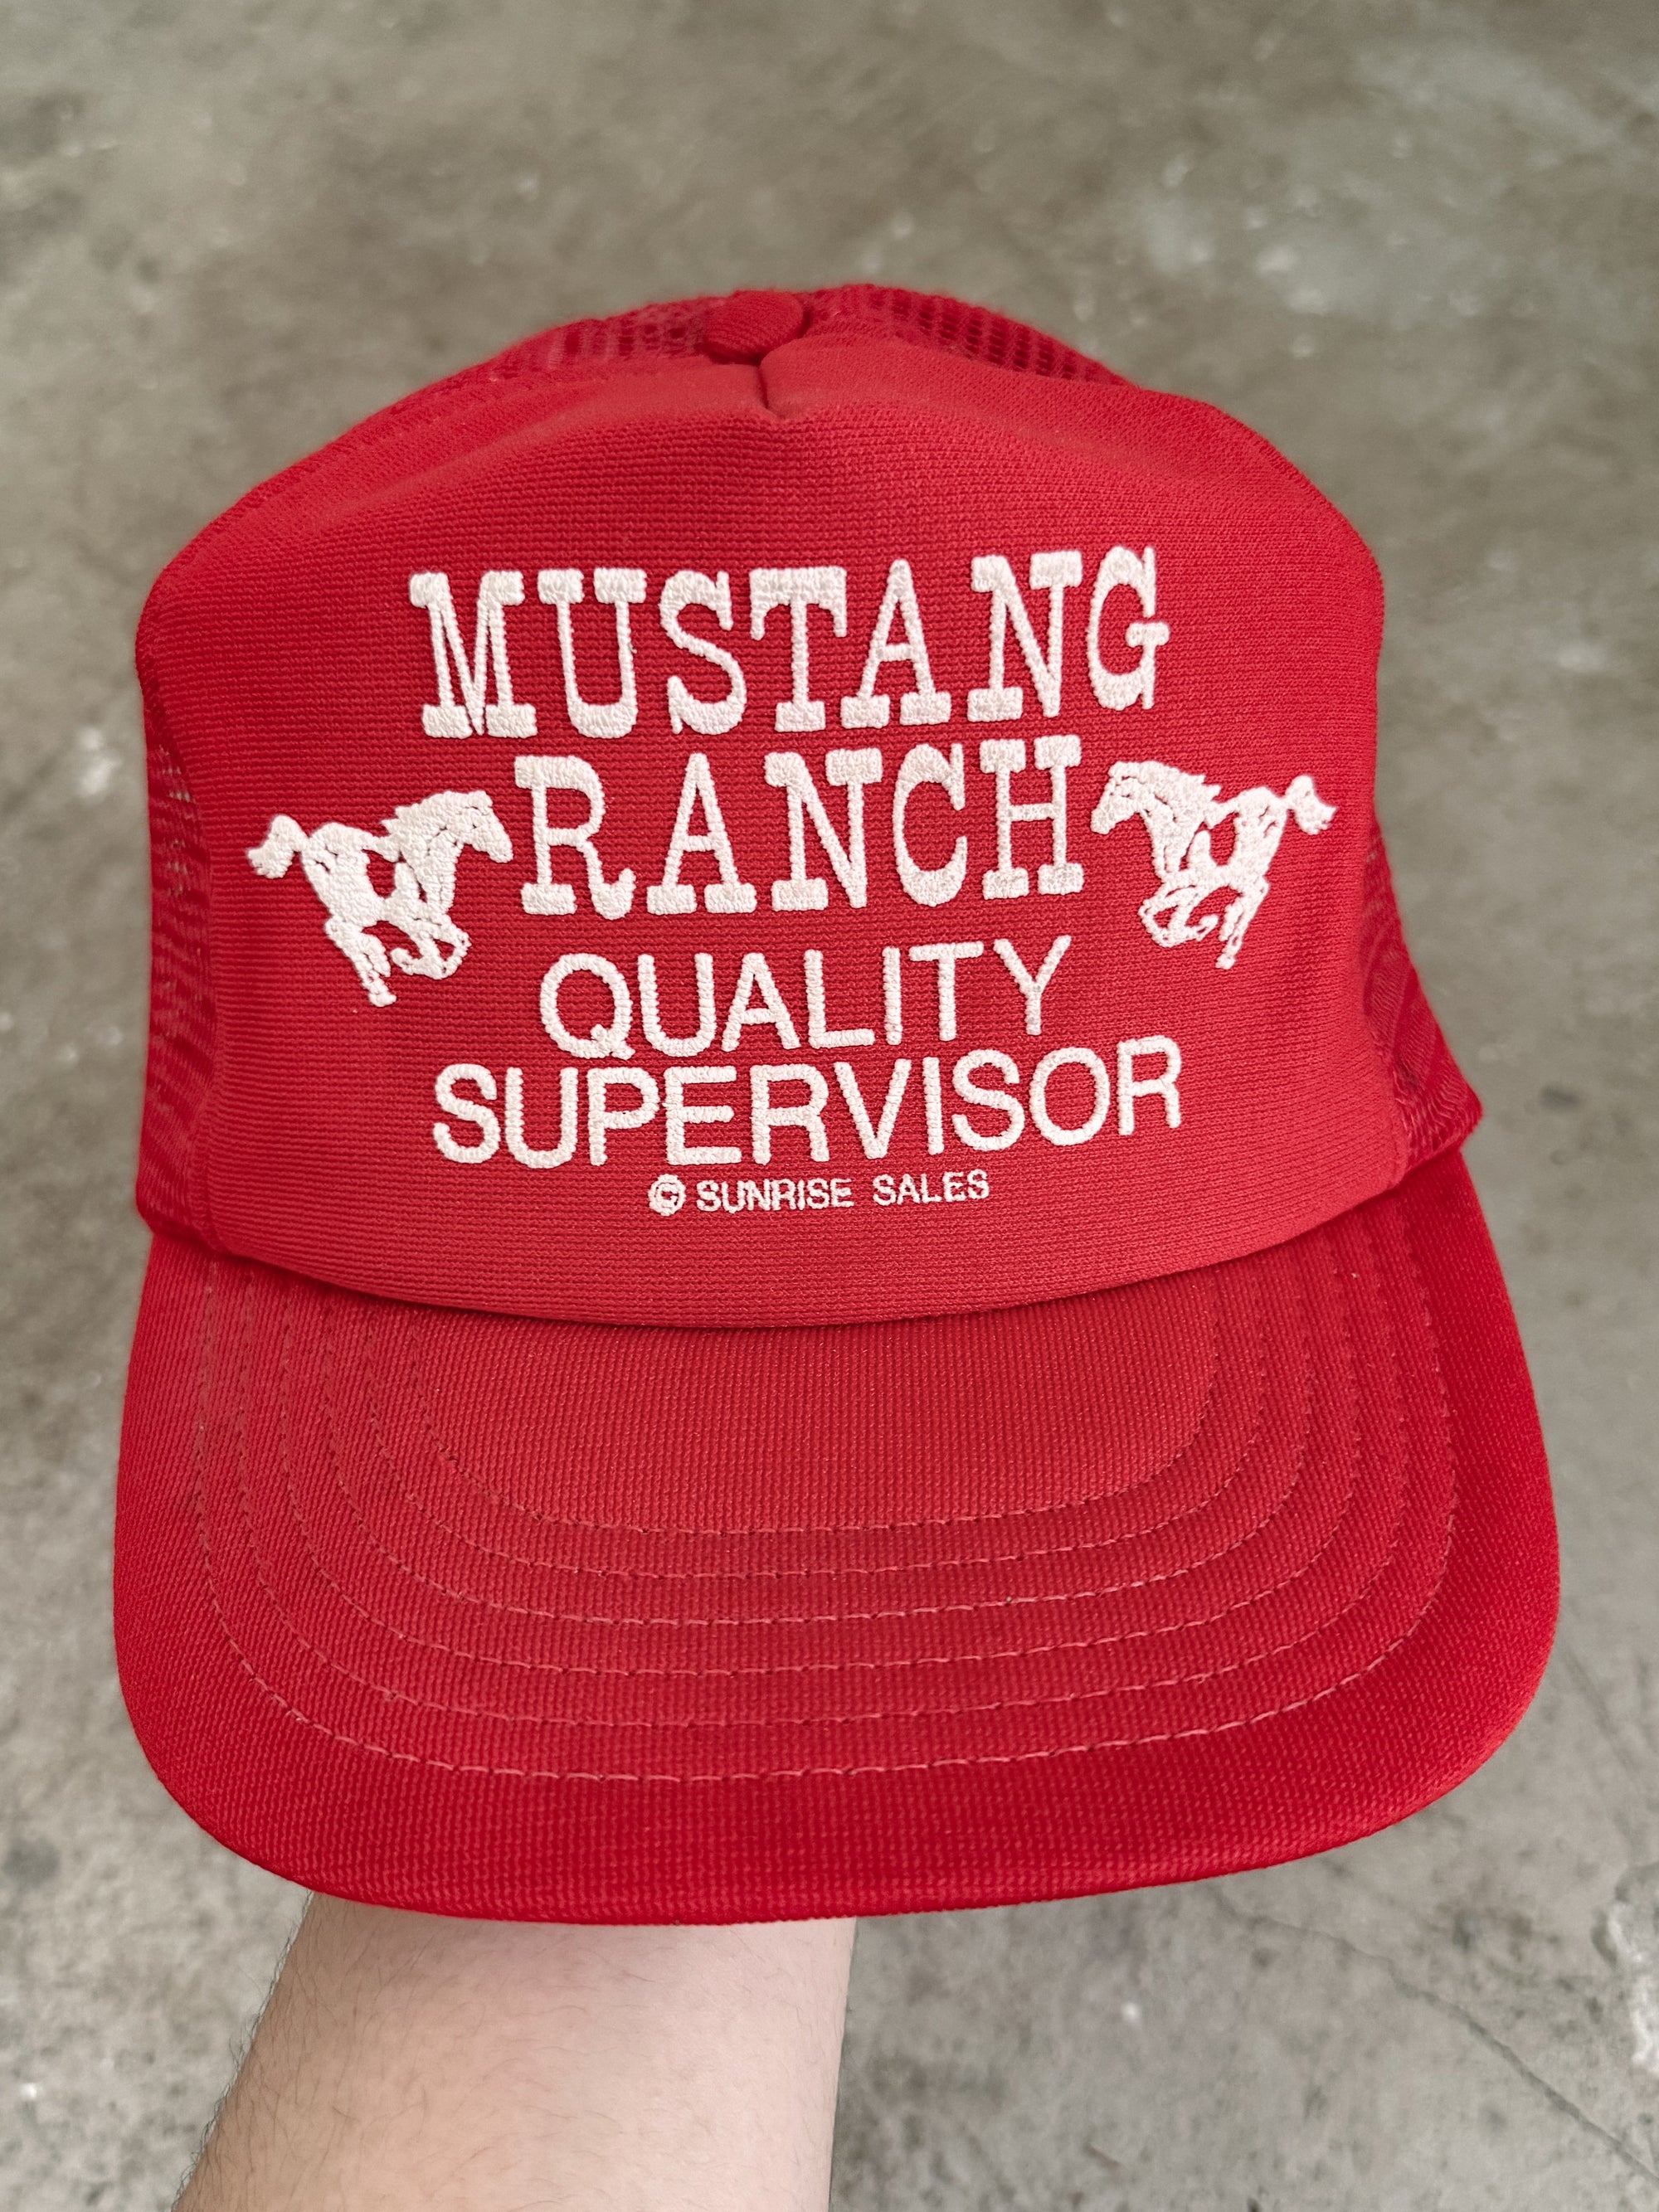 1980s "Mustang Ranch" Trucker Hat